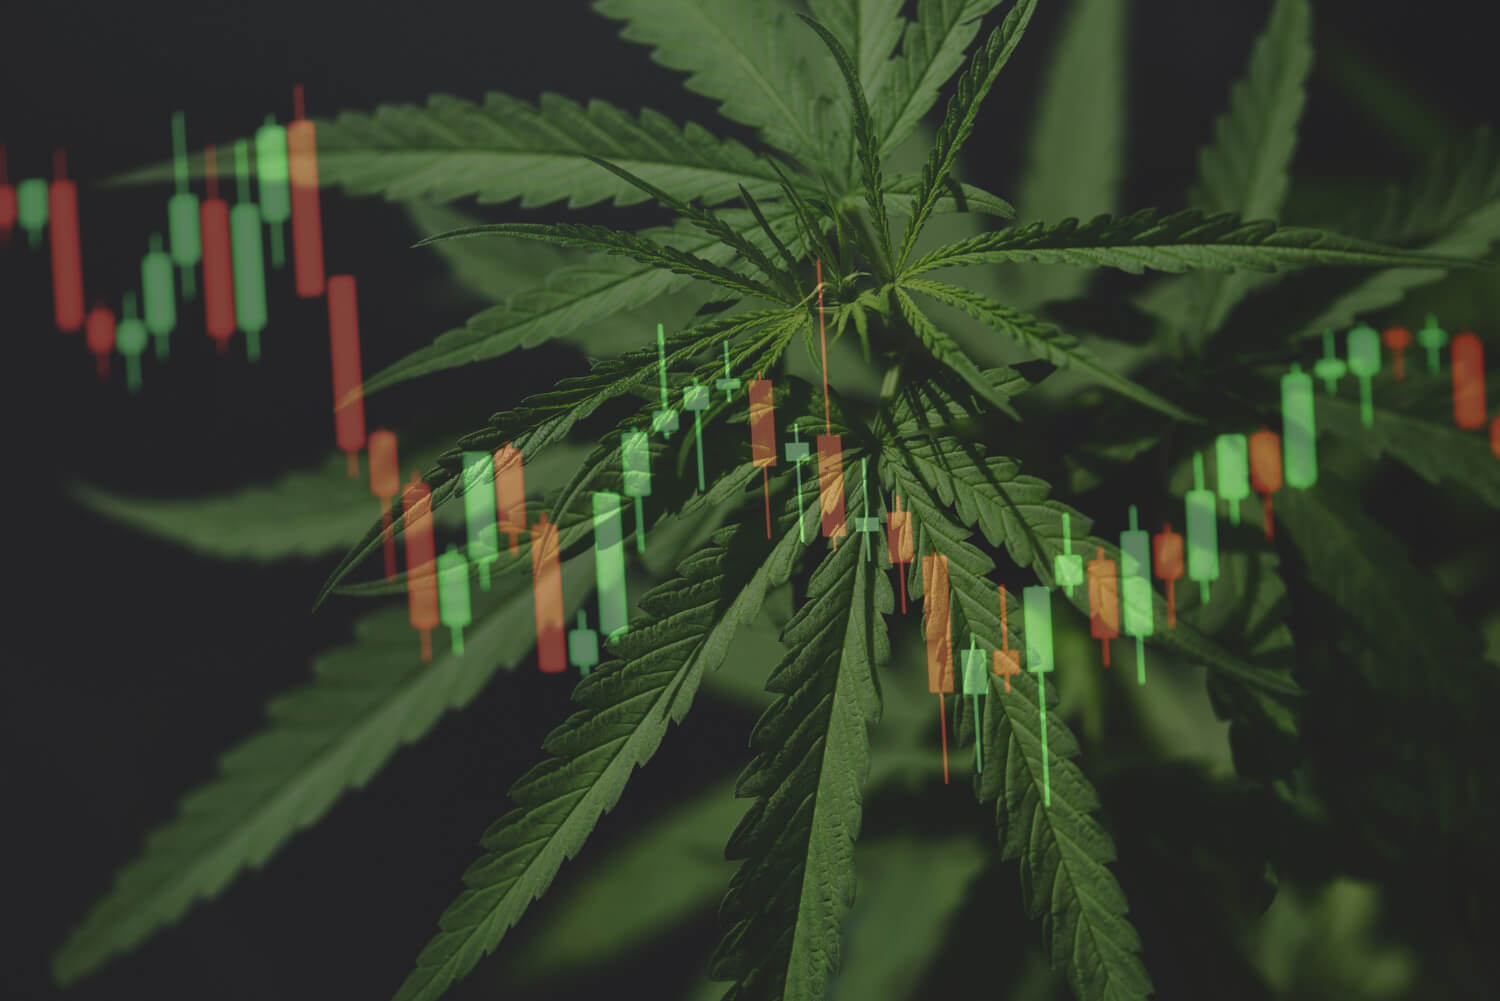 best cannabis stocks